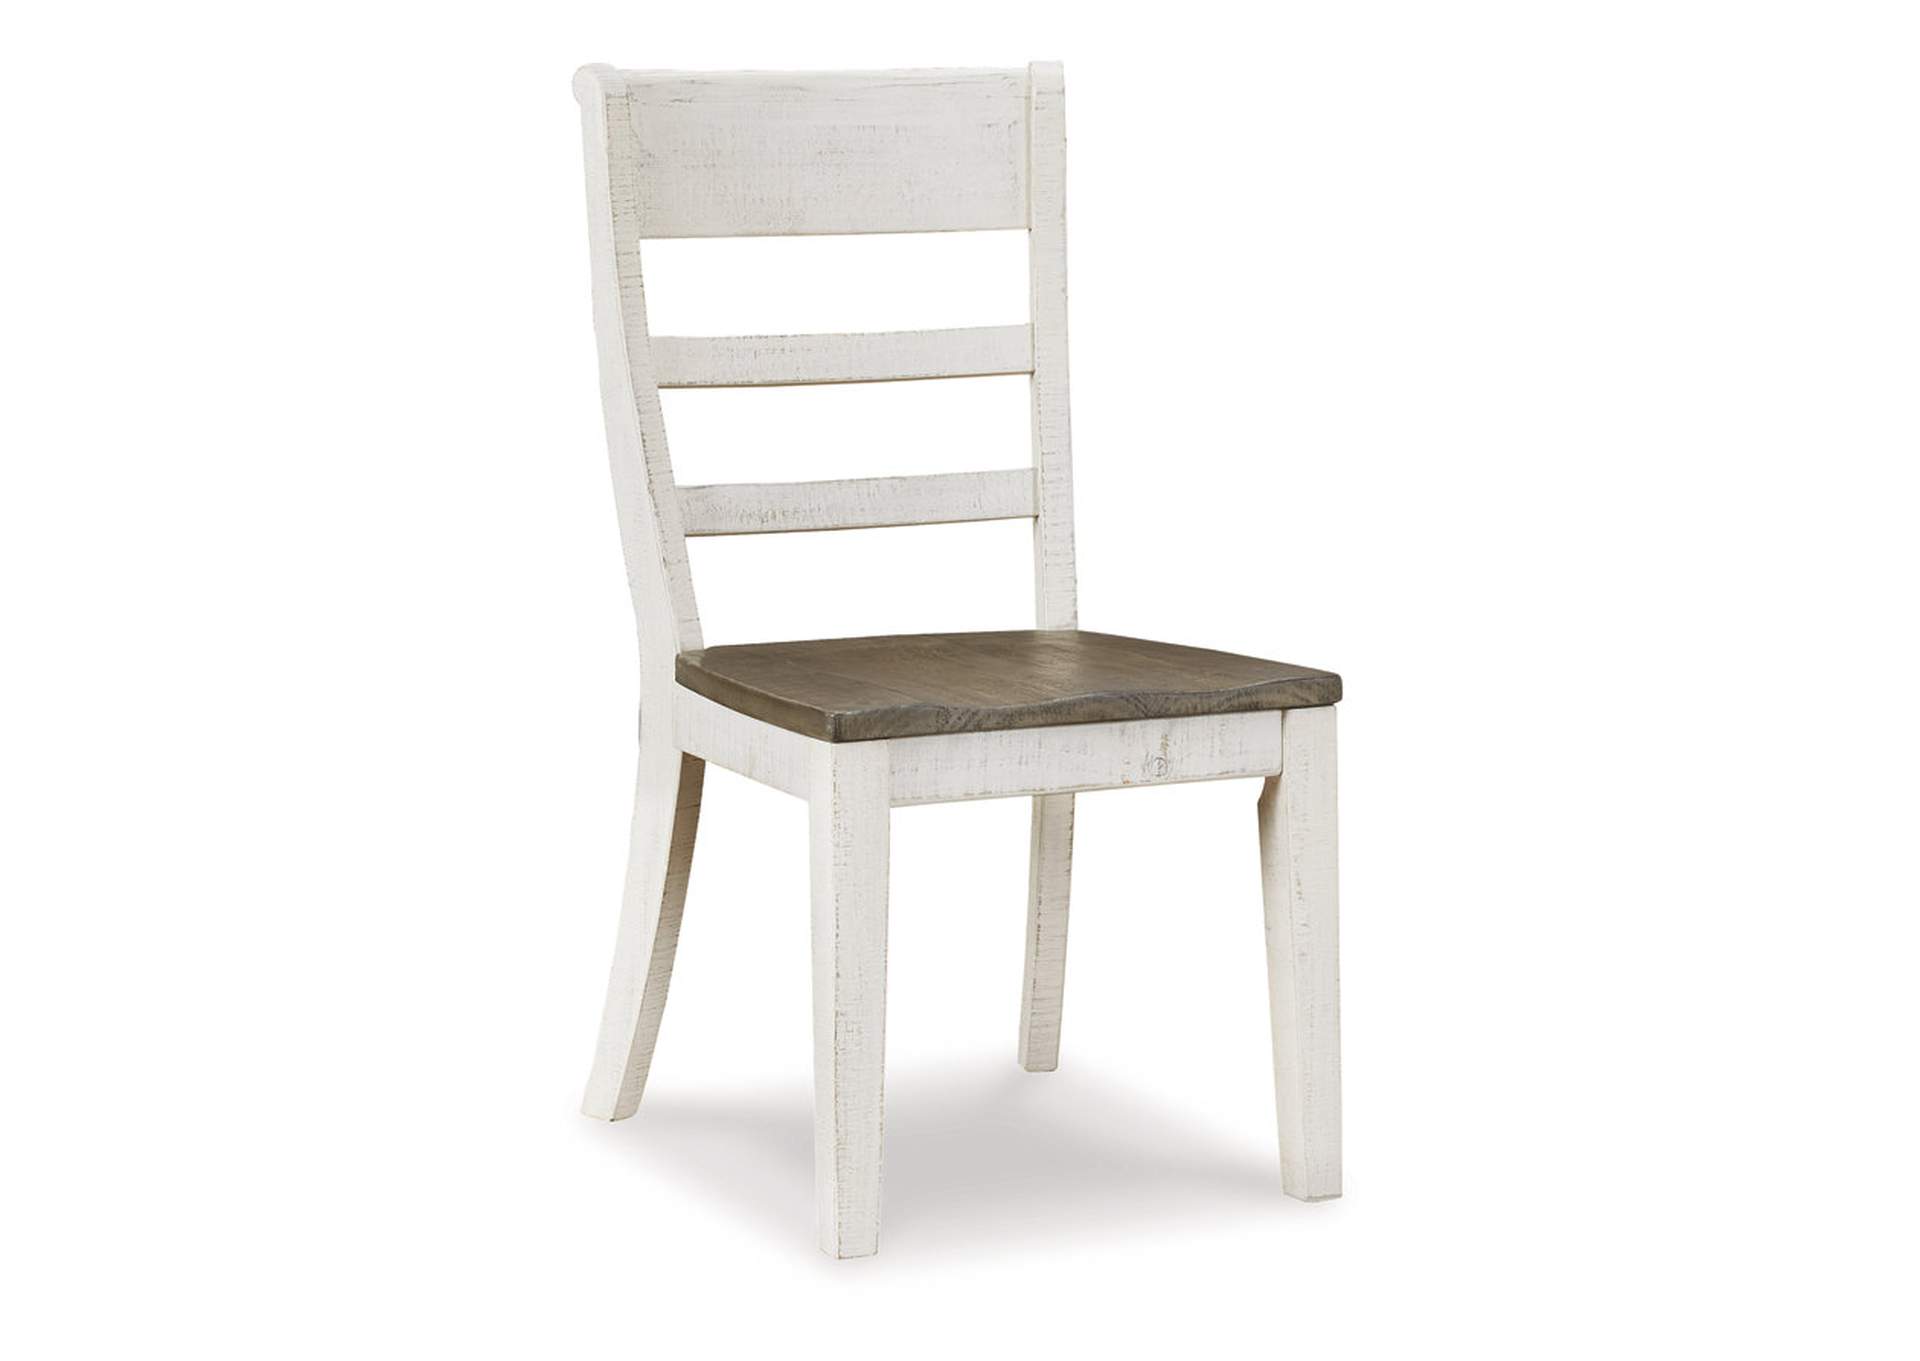 Havalance Dining Chair,Millennium